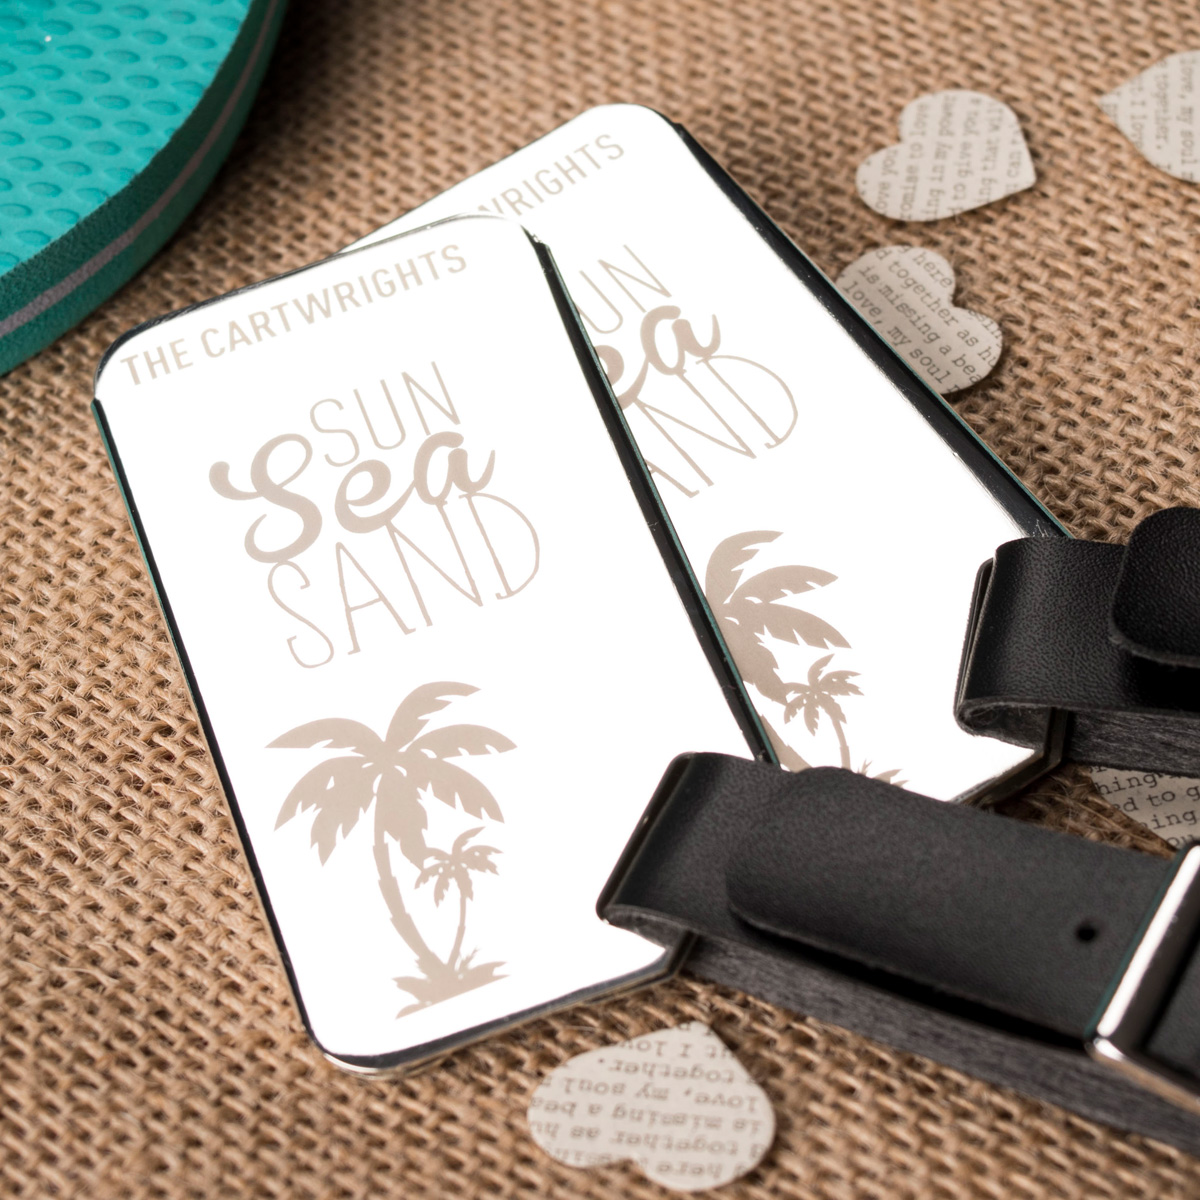 Personalised Stainless Steel Luggage Tags - Sun Sea Sand